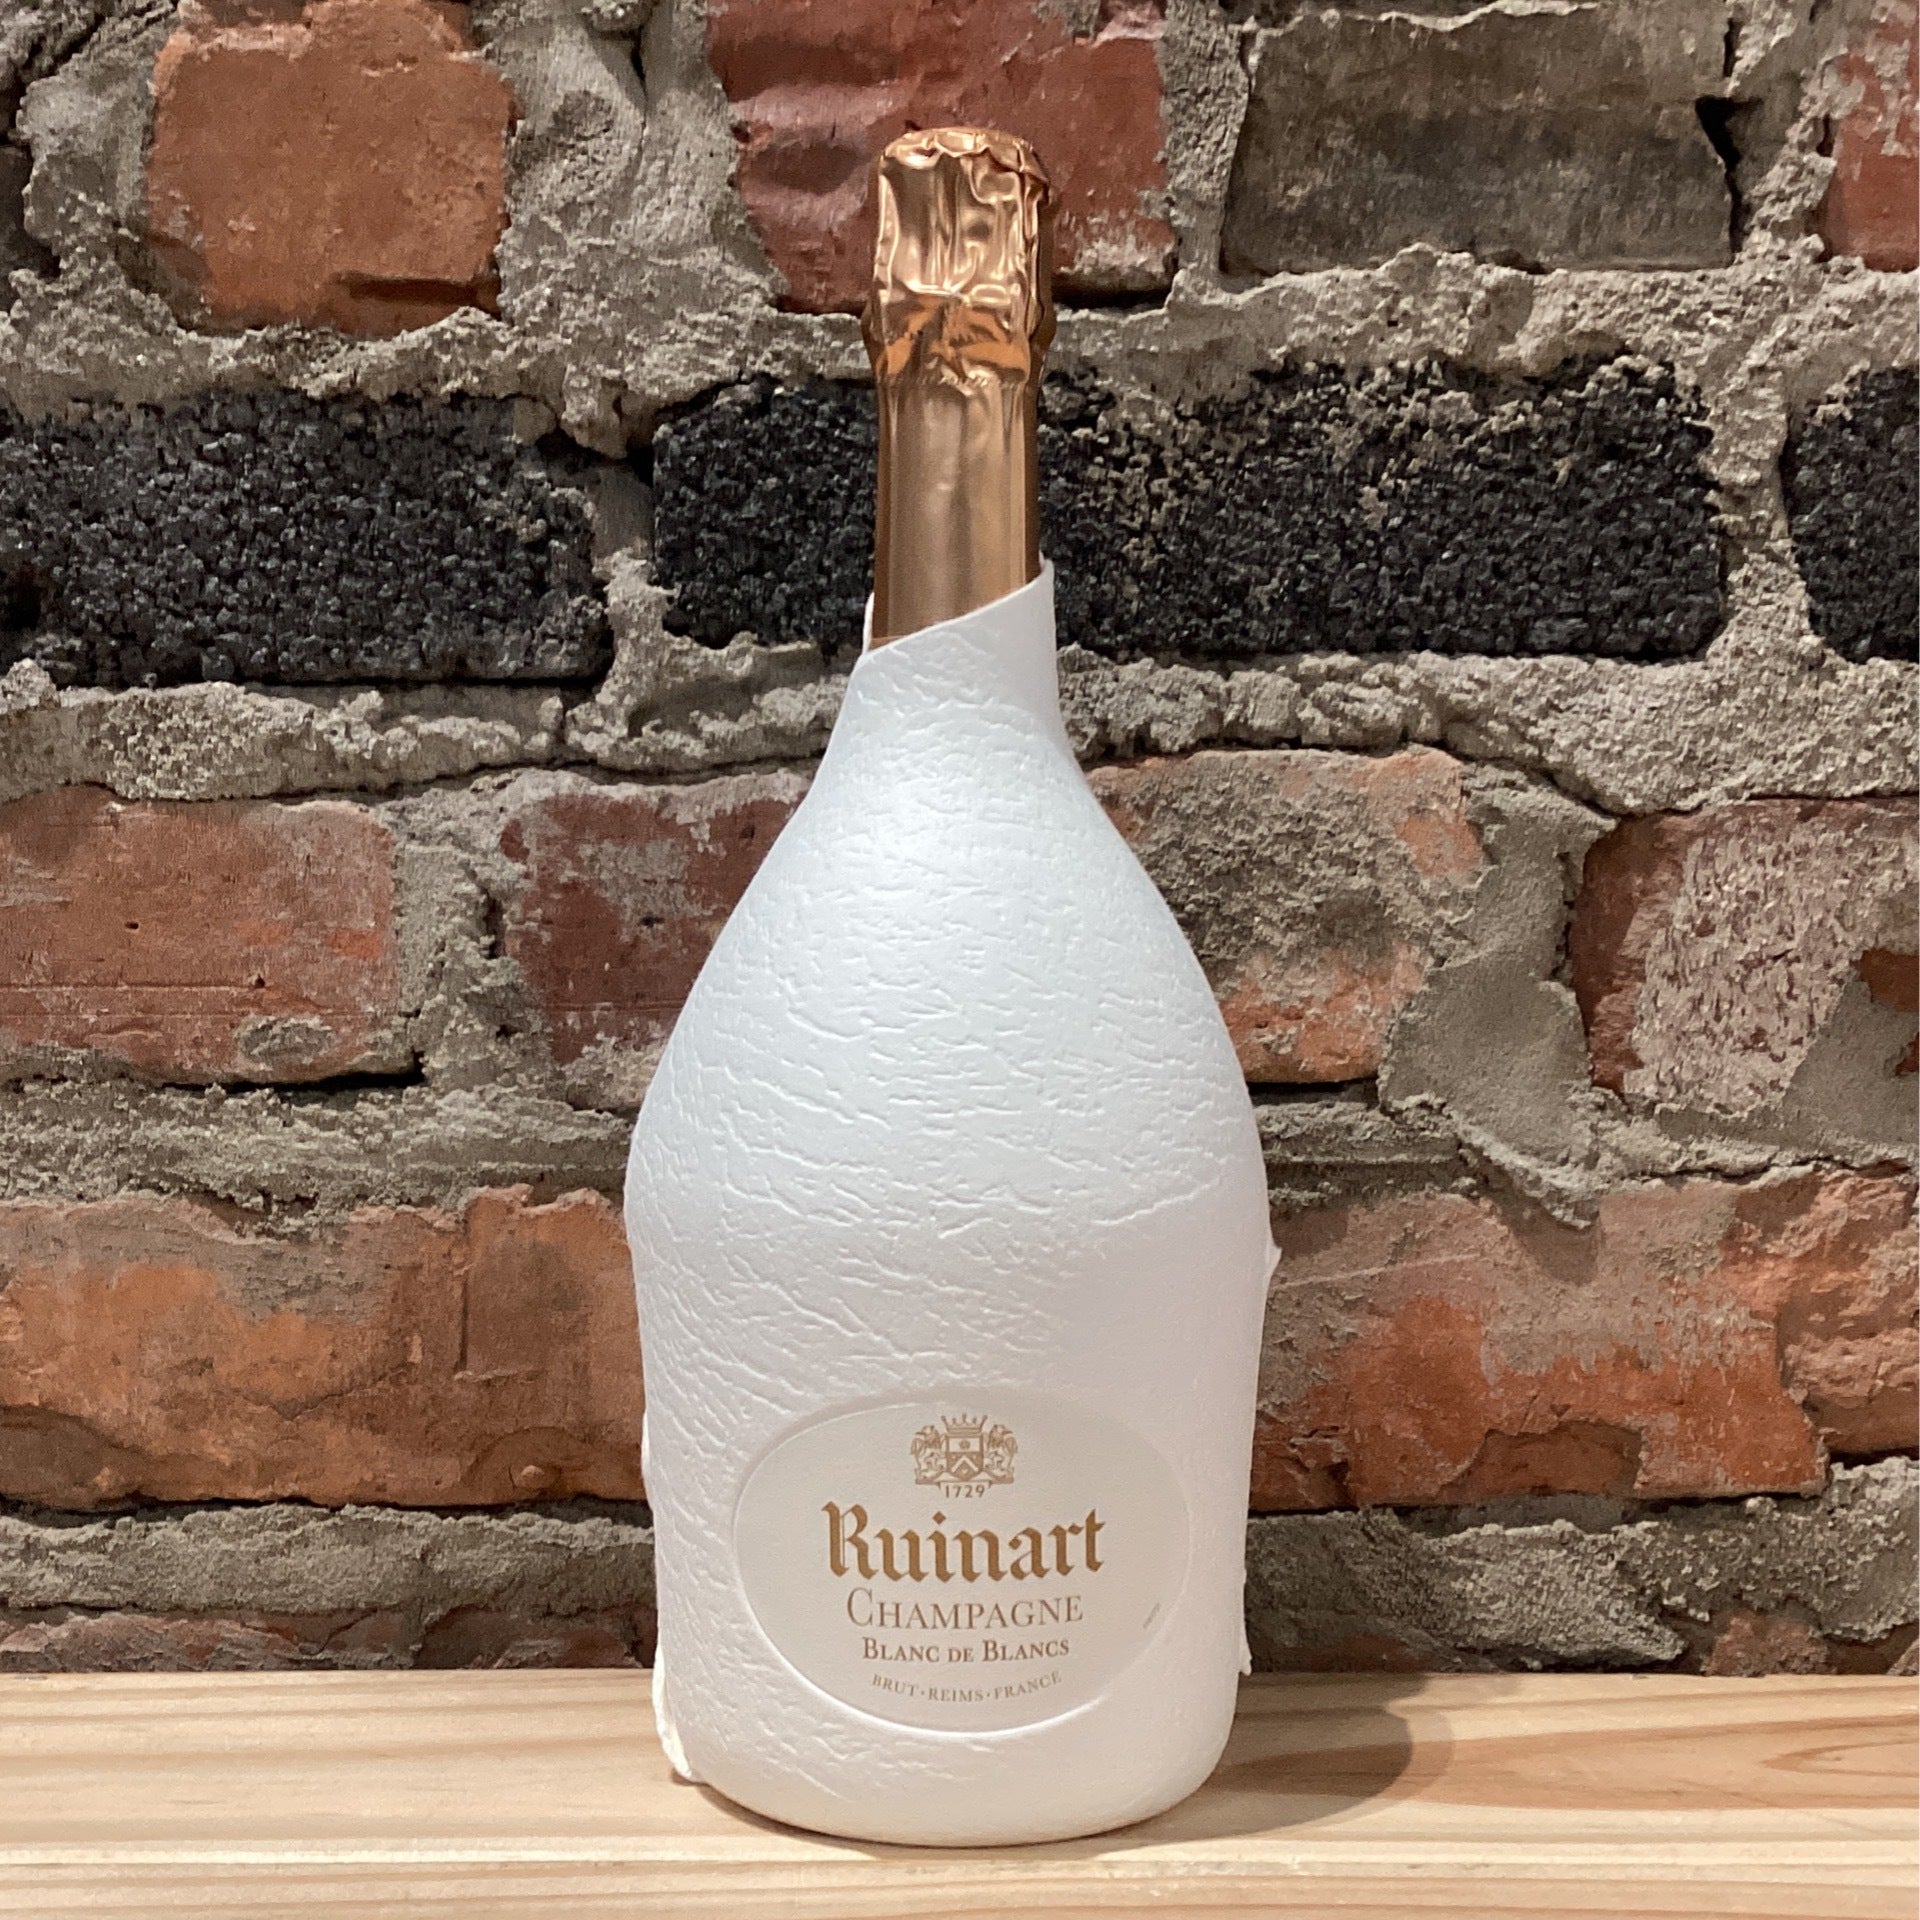 Champagne Ruinart Blanc de Blancs - 375mL